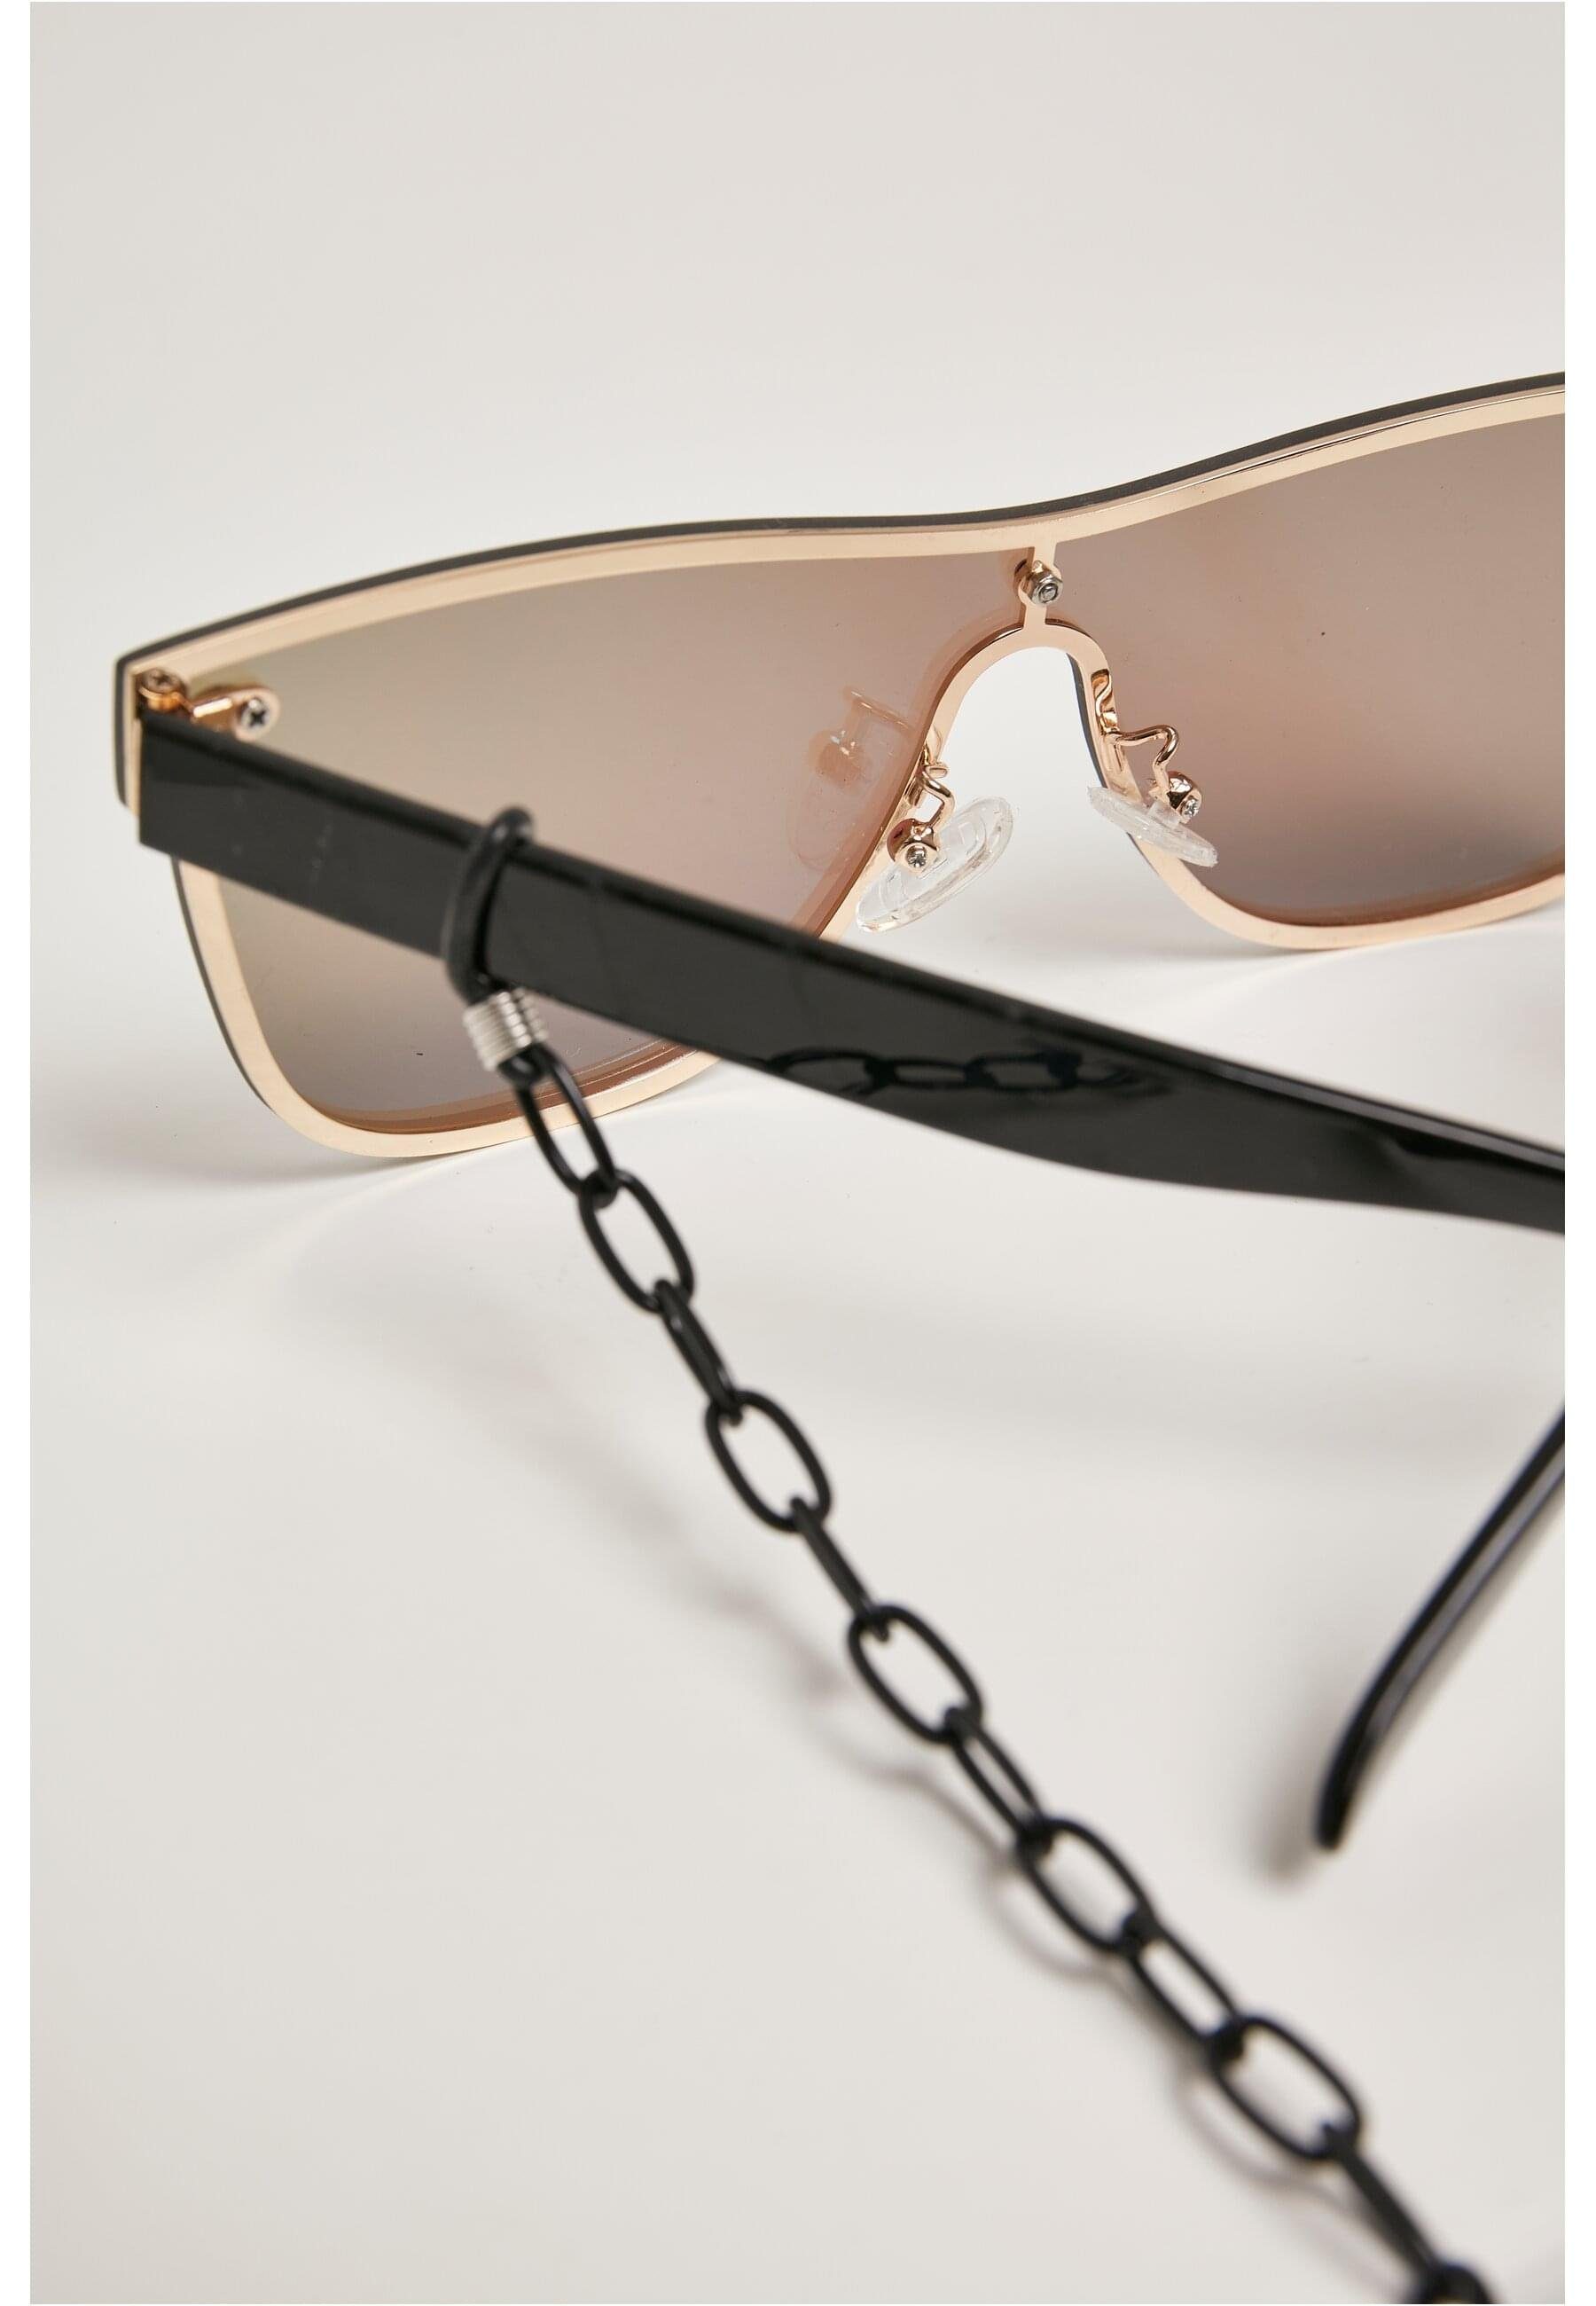 URBAN CLASSICS Sonnenbrille Sunglasses Chain Unisex 103 blk/blue